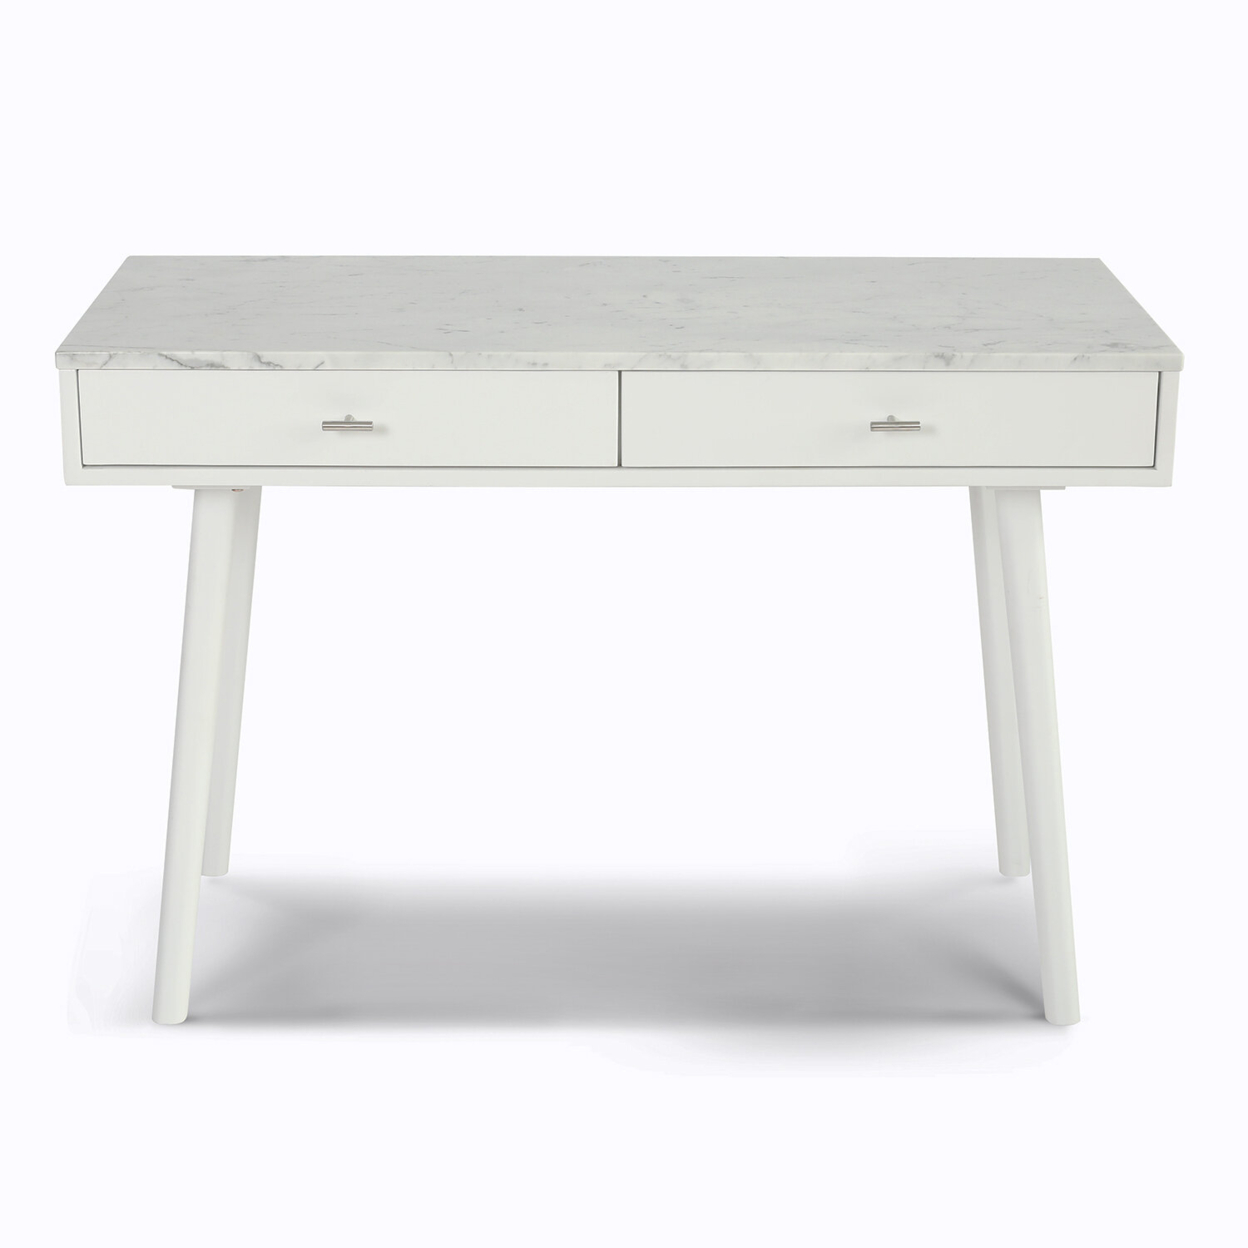 Viola 44" Rectangular Italian Carrara White Marble Writing Desk with Legs - White